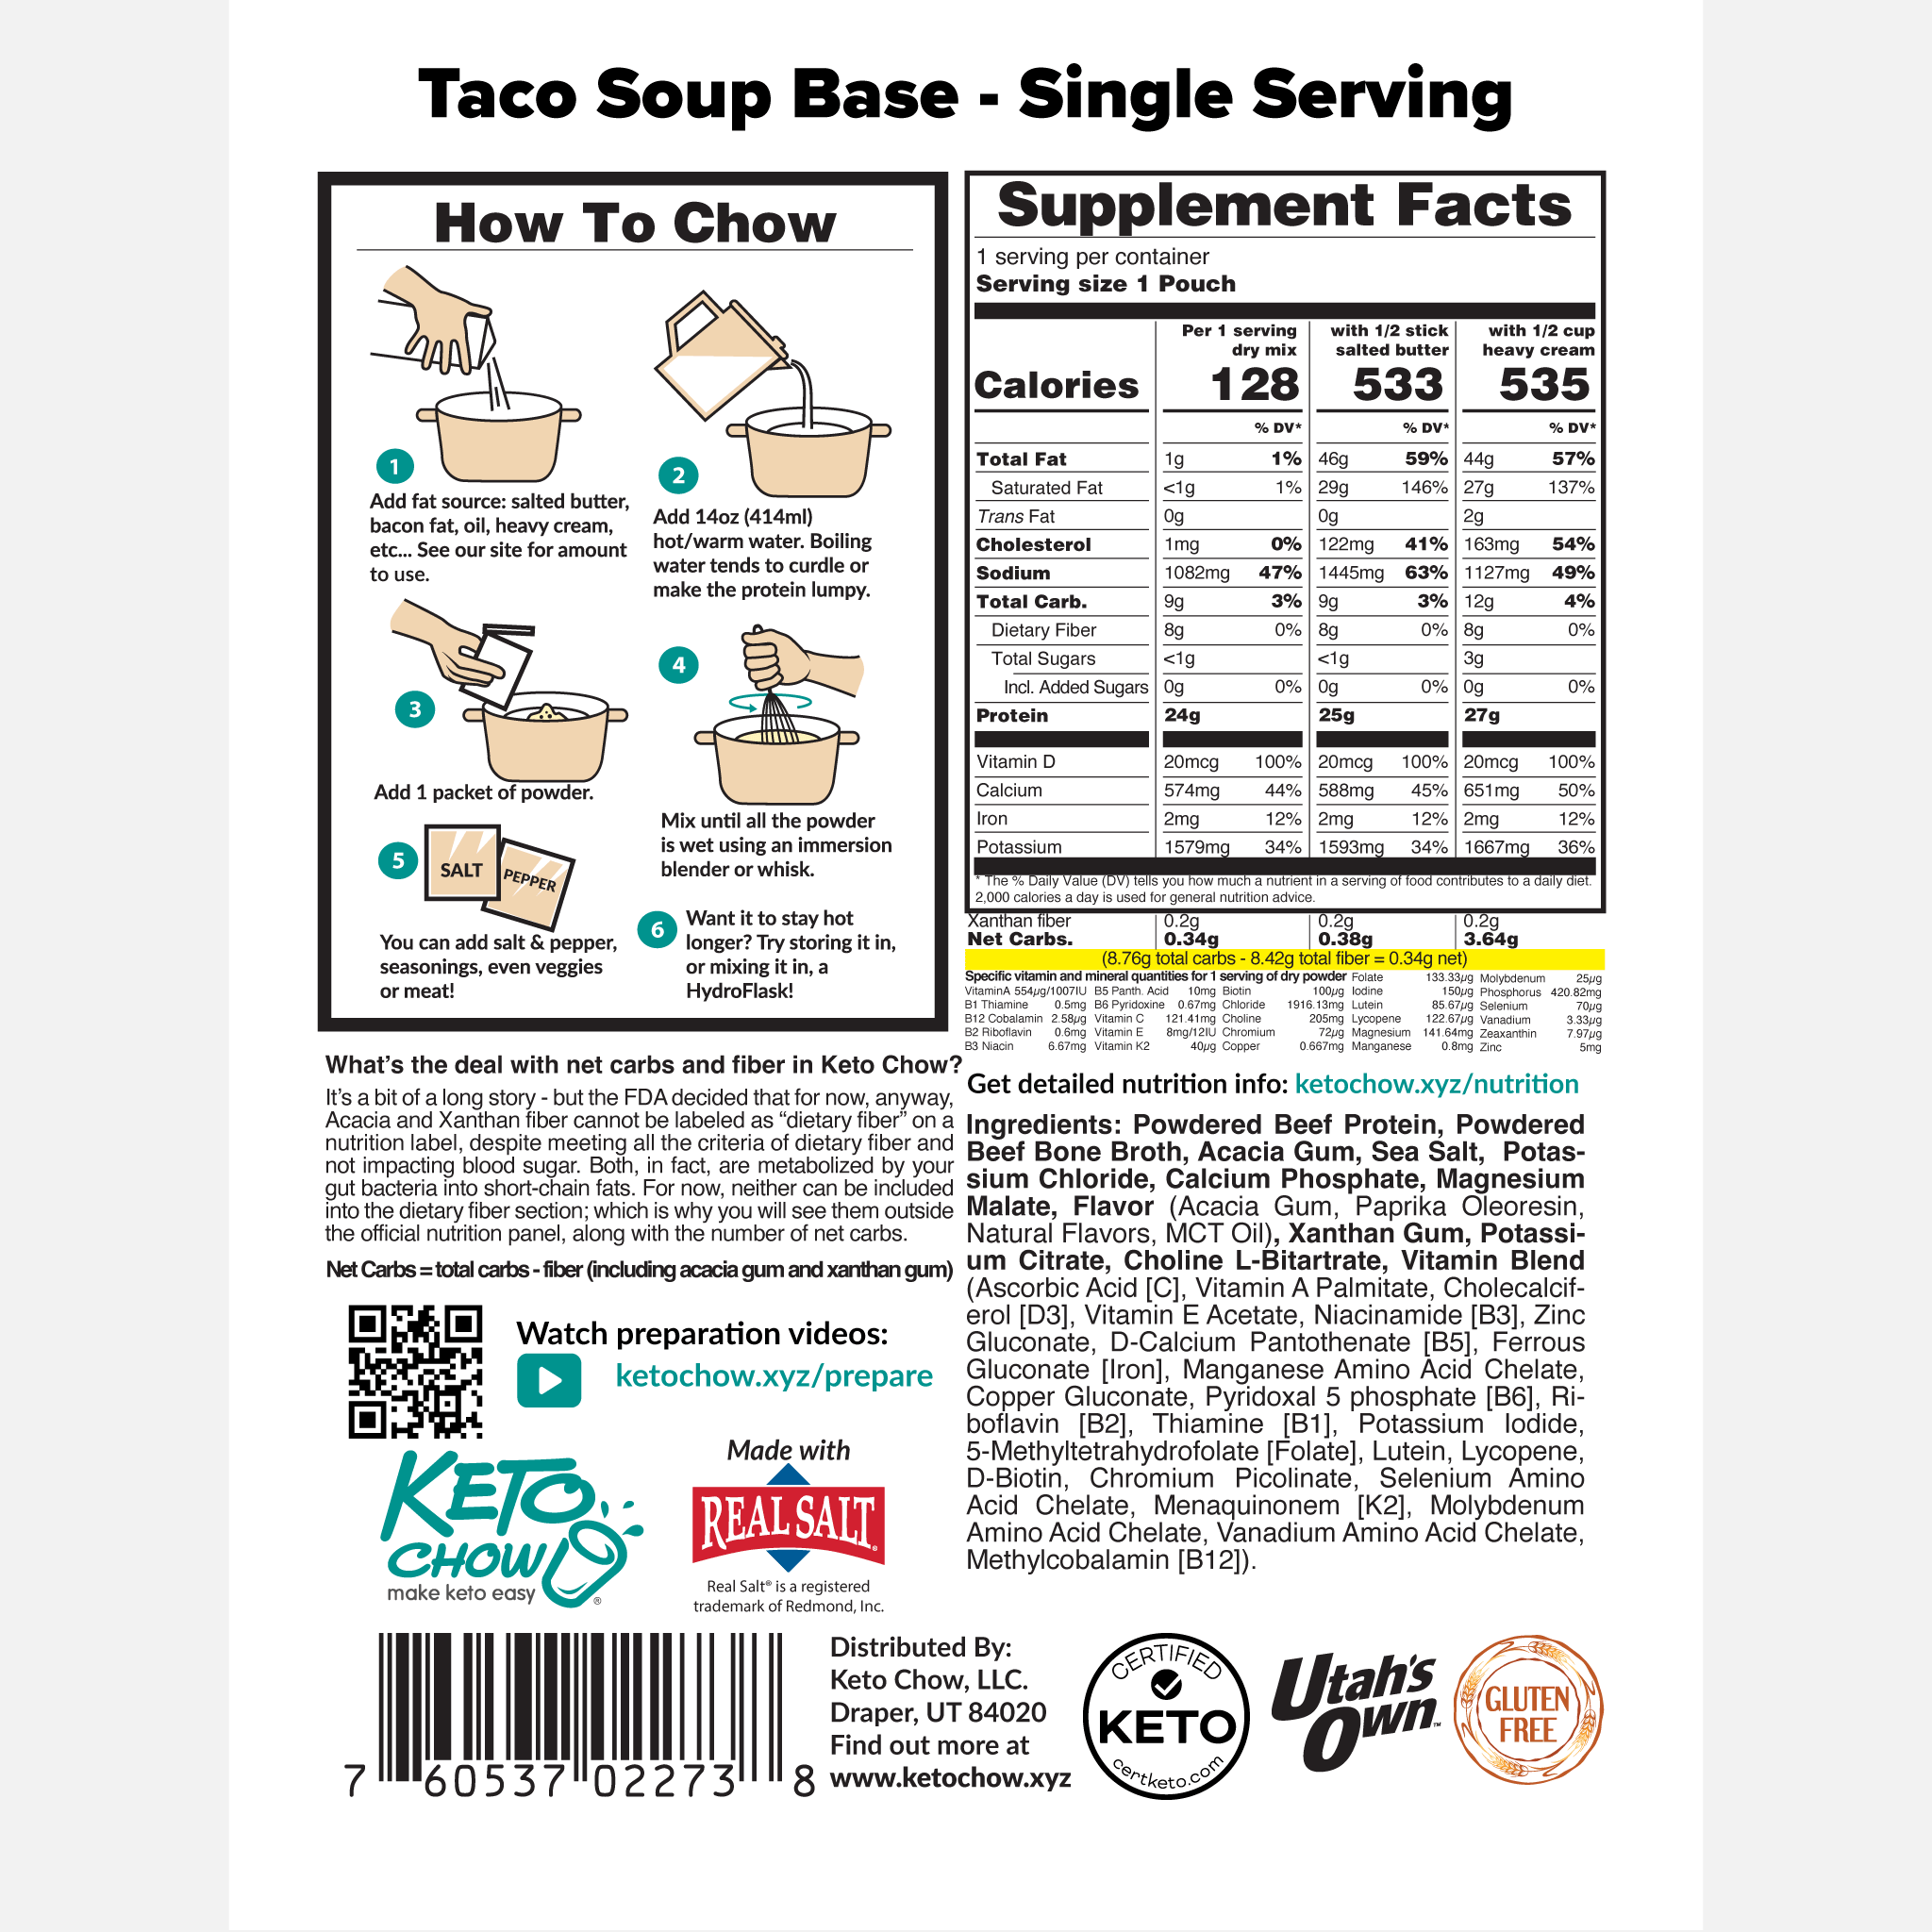 Taco Soup Base nutrition label. For more info visit ketochow.xyz/nutrition